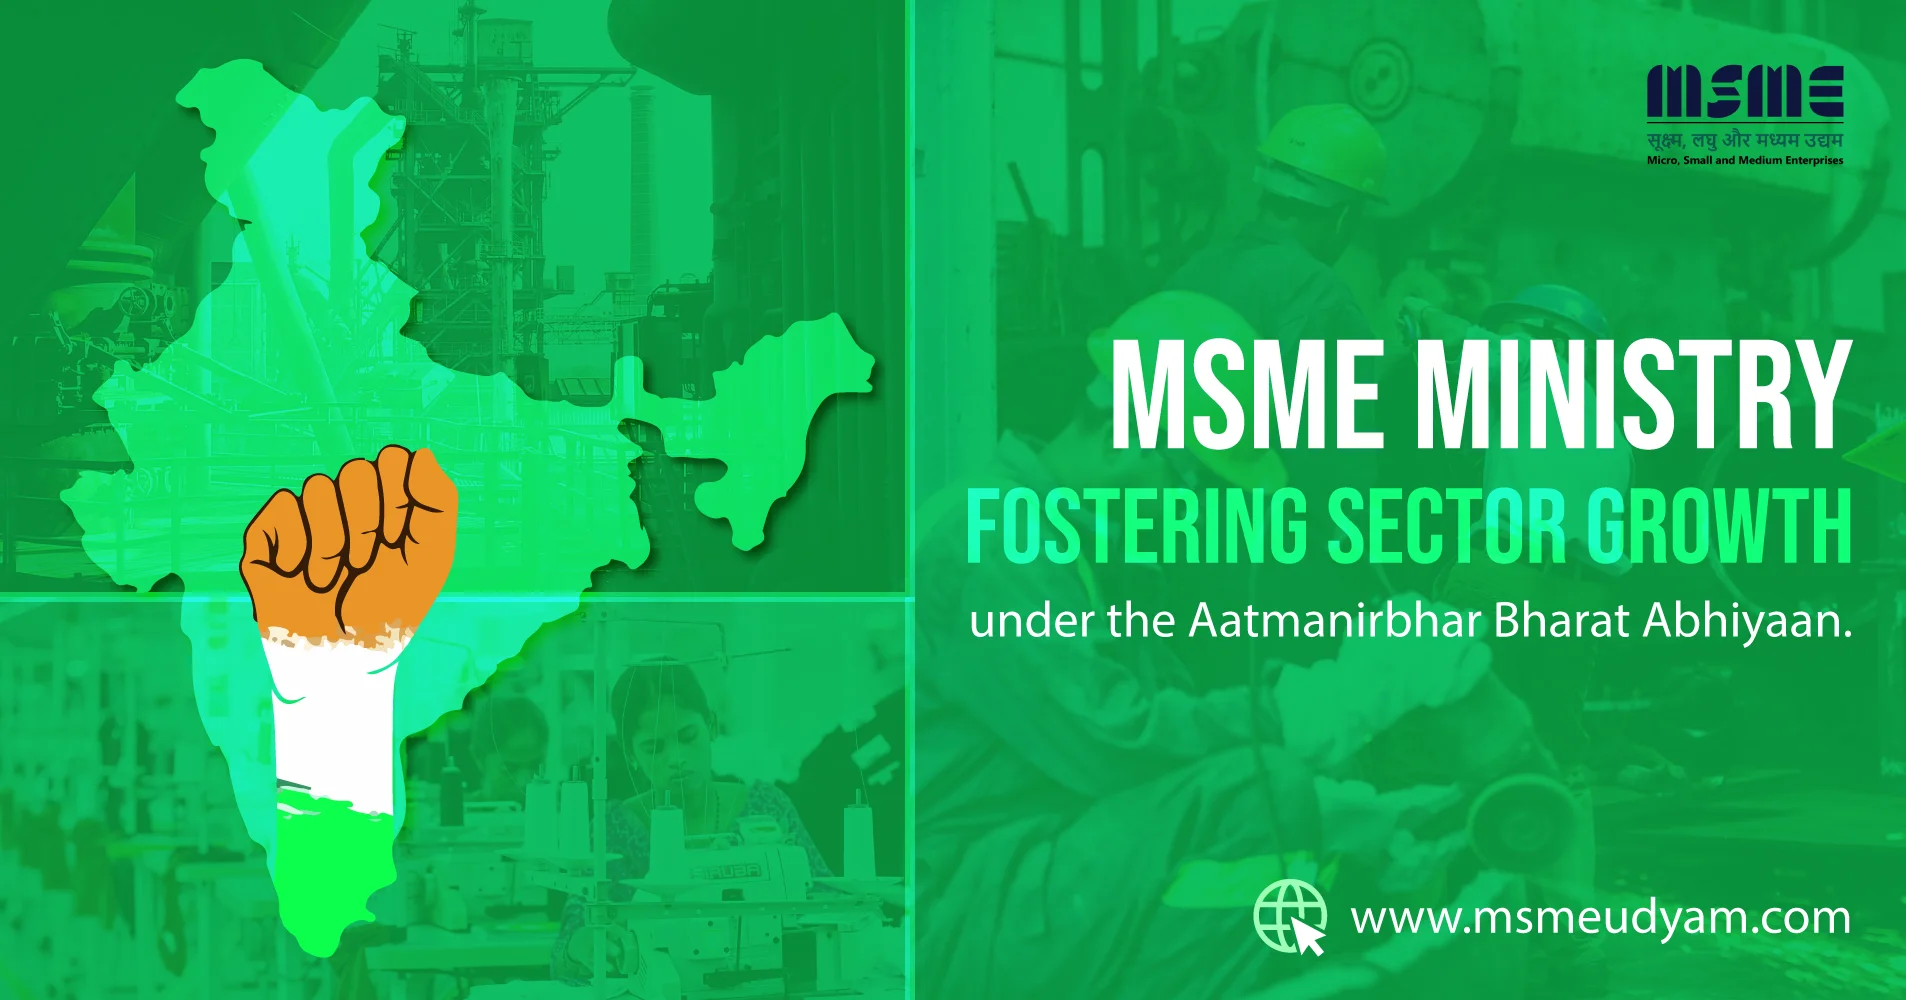 How has MSME Ministry prioritized sector growth under Aatmanirbhar Bharat Abhiyaan?